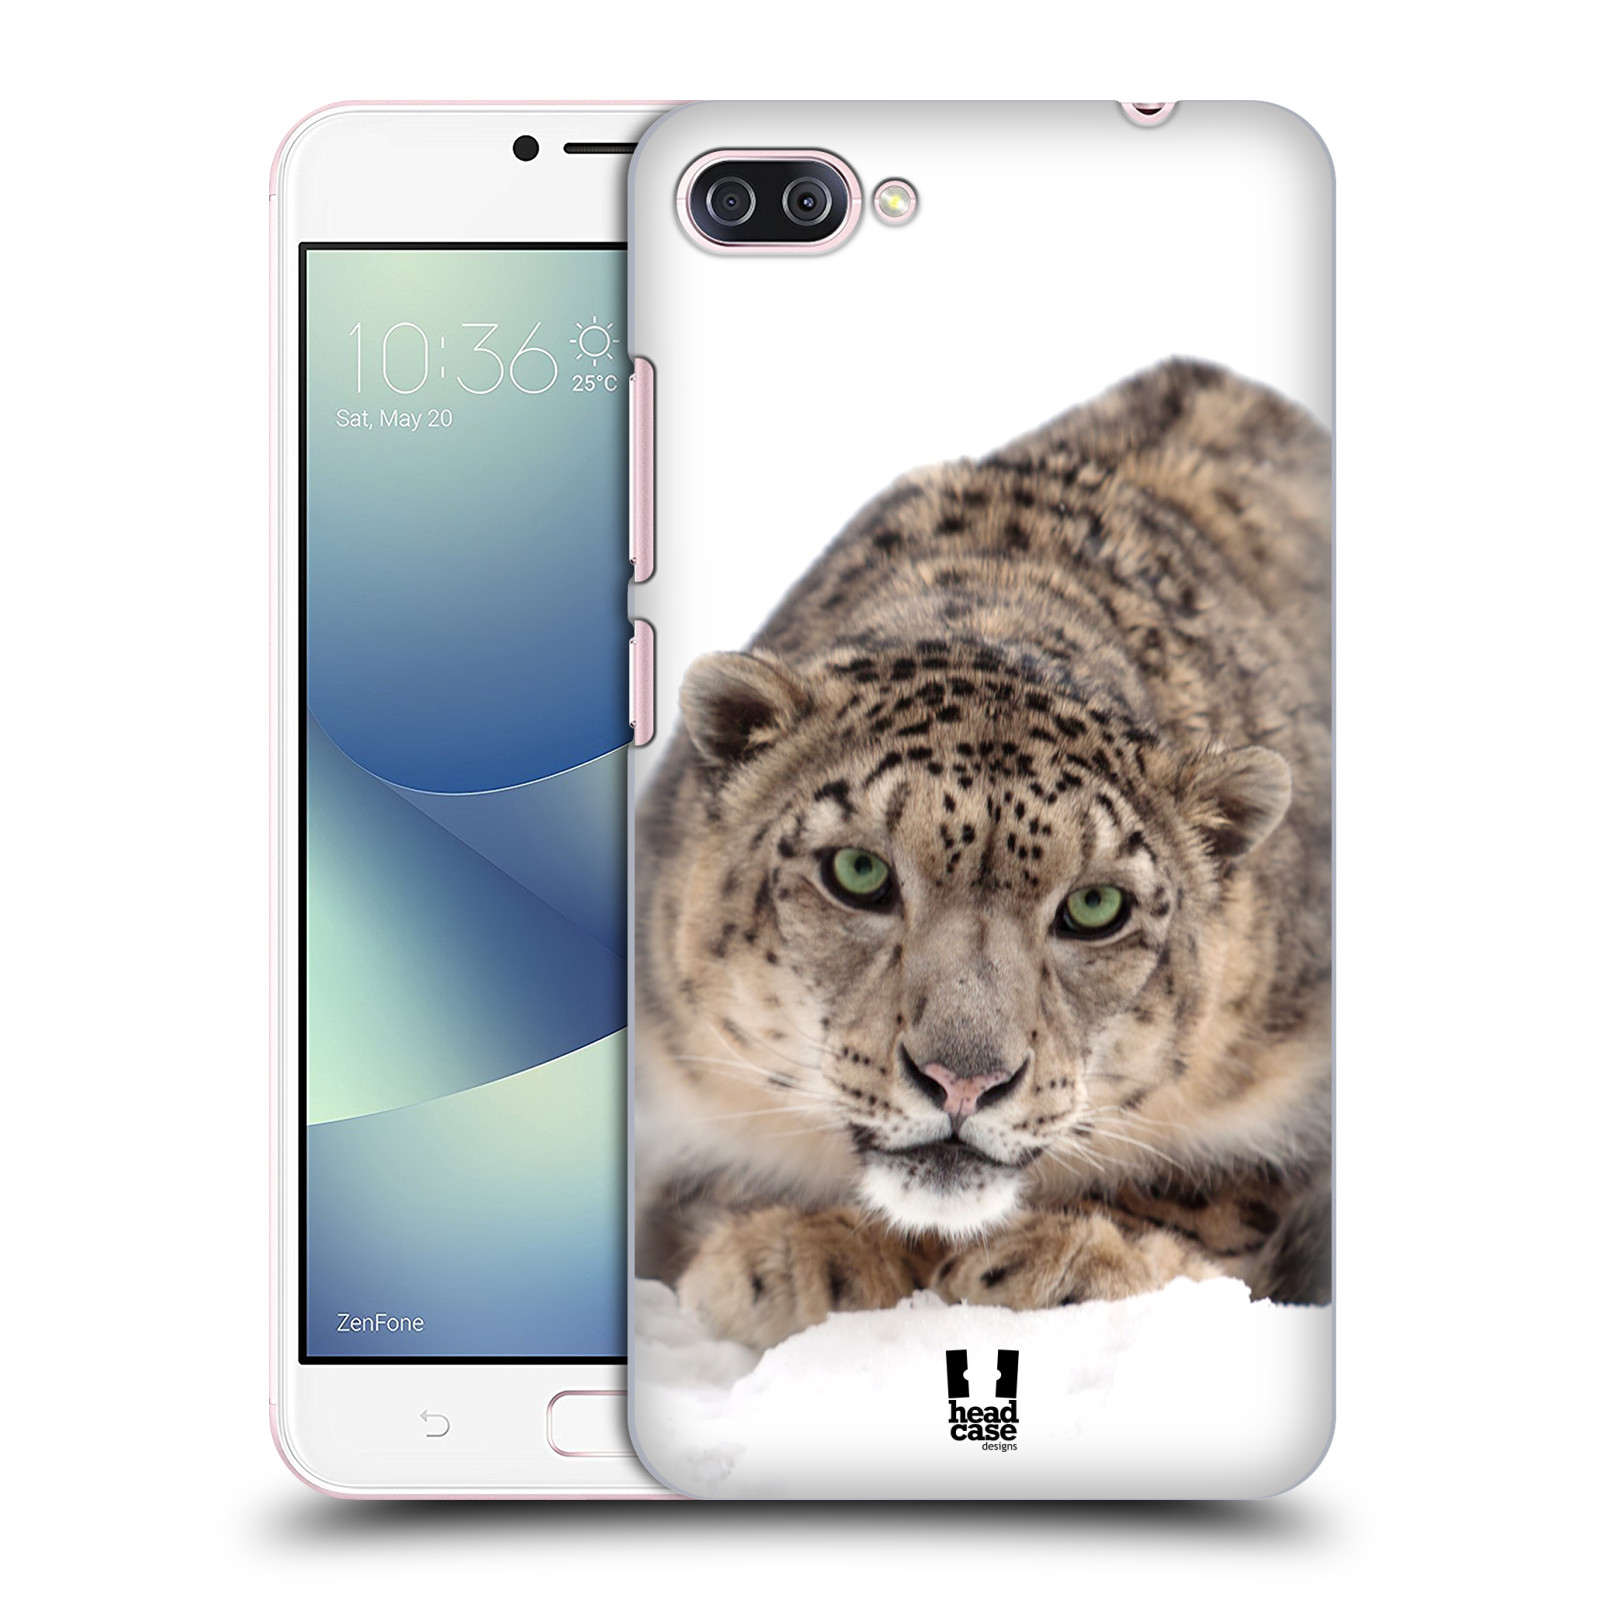 HEAD CASE plastový obal na mobil Asus Zenfone 4 MAX ZC554KL vzor Divočina, Divoký život a zvířata foto SNĚŽNÝ LEOPARD